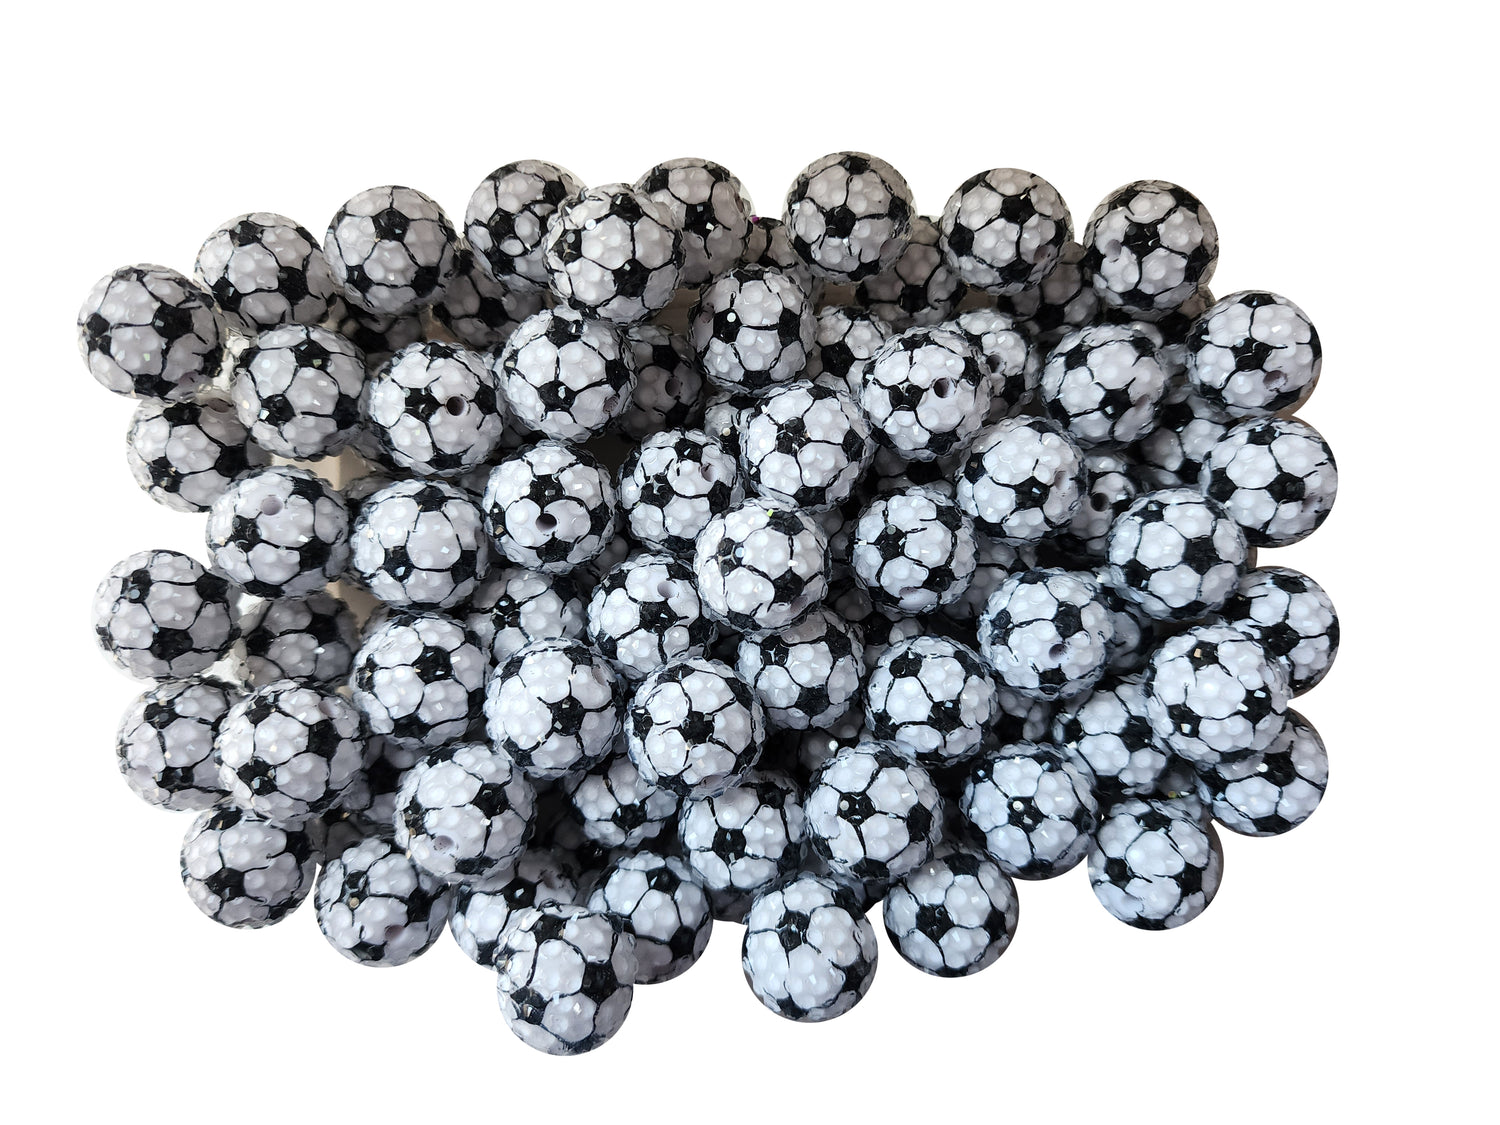 rhinestone soccer ball 20mm printed wholesale bubblegum beads